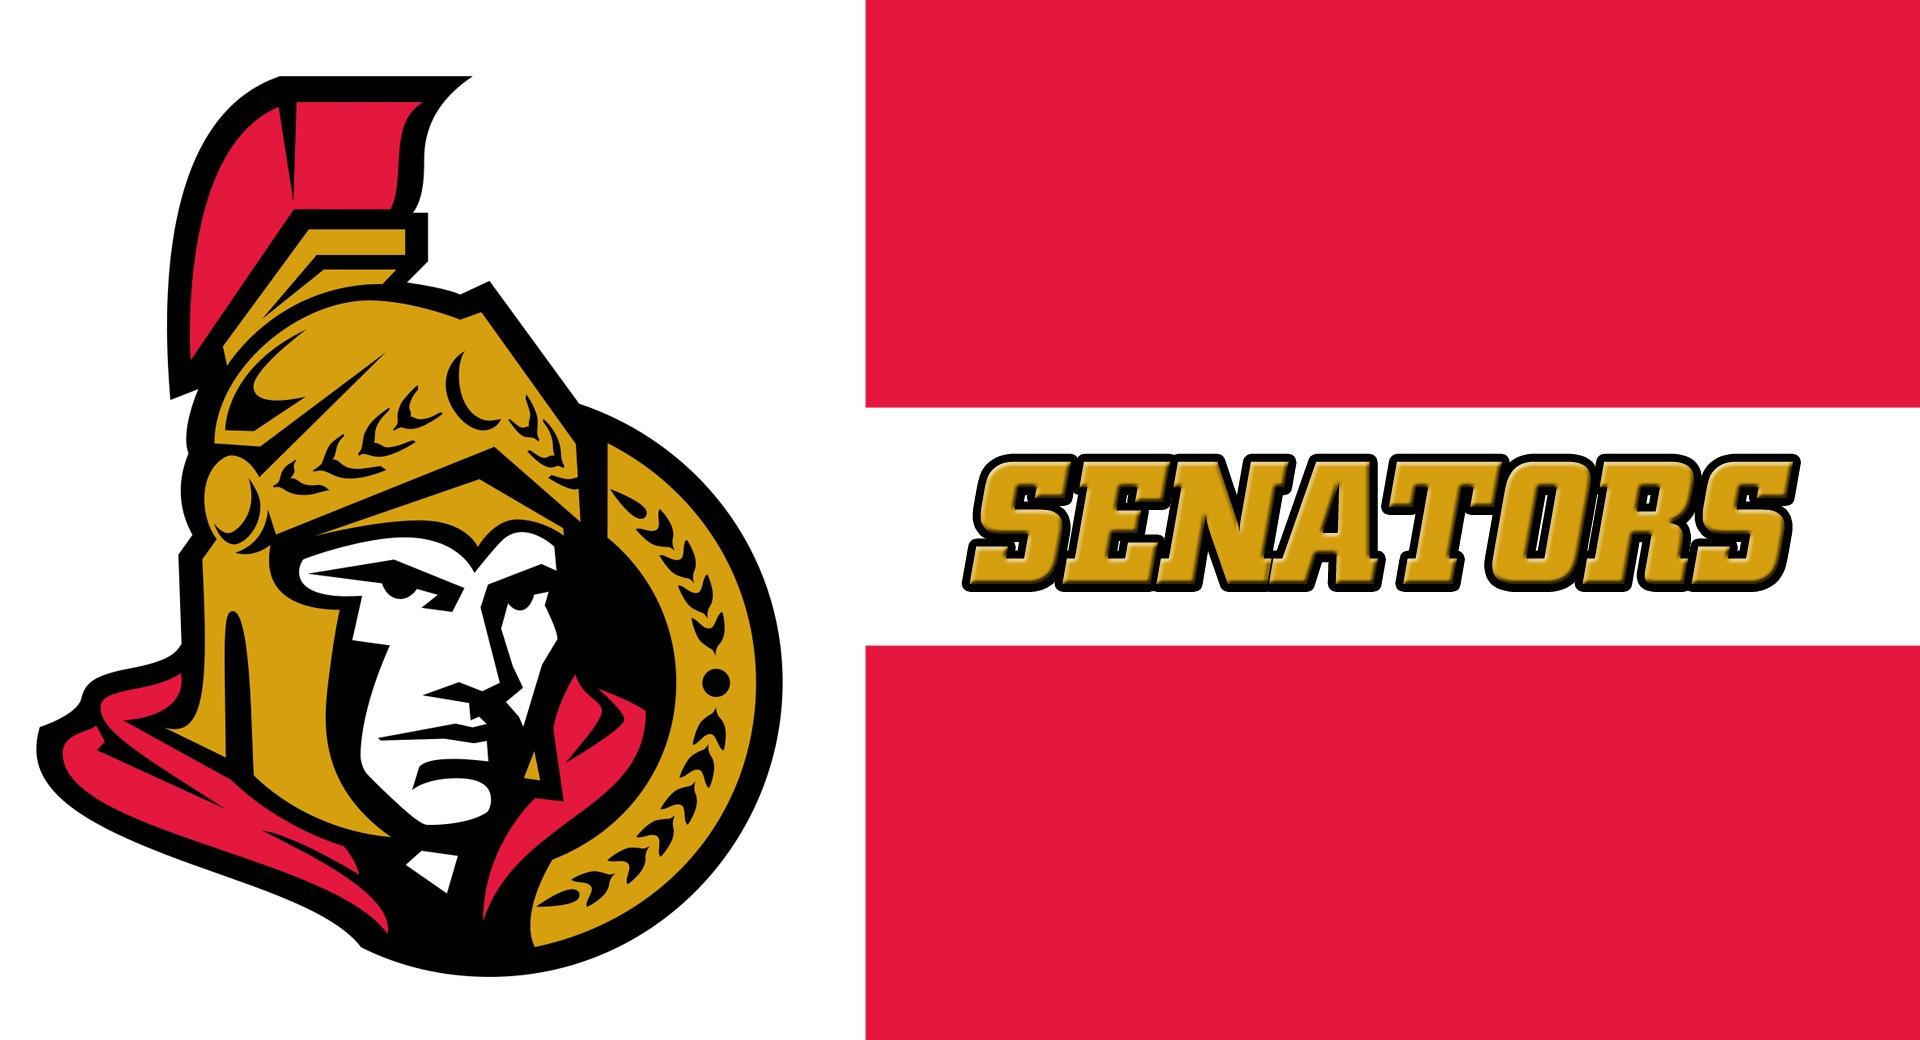 Ottawa Senators at 1600 x 1200 size wallpapers HD quality